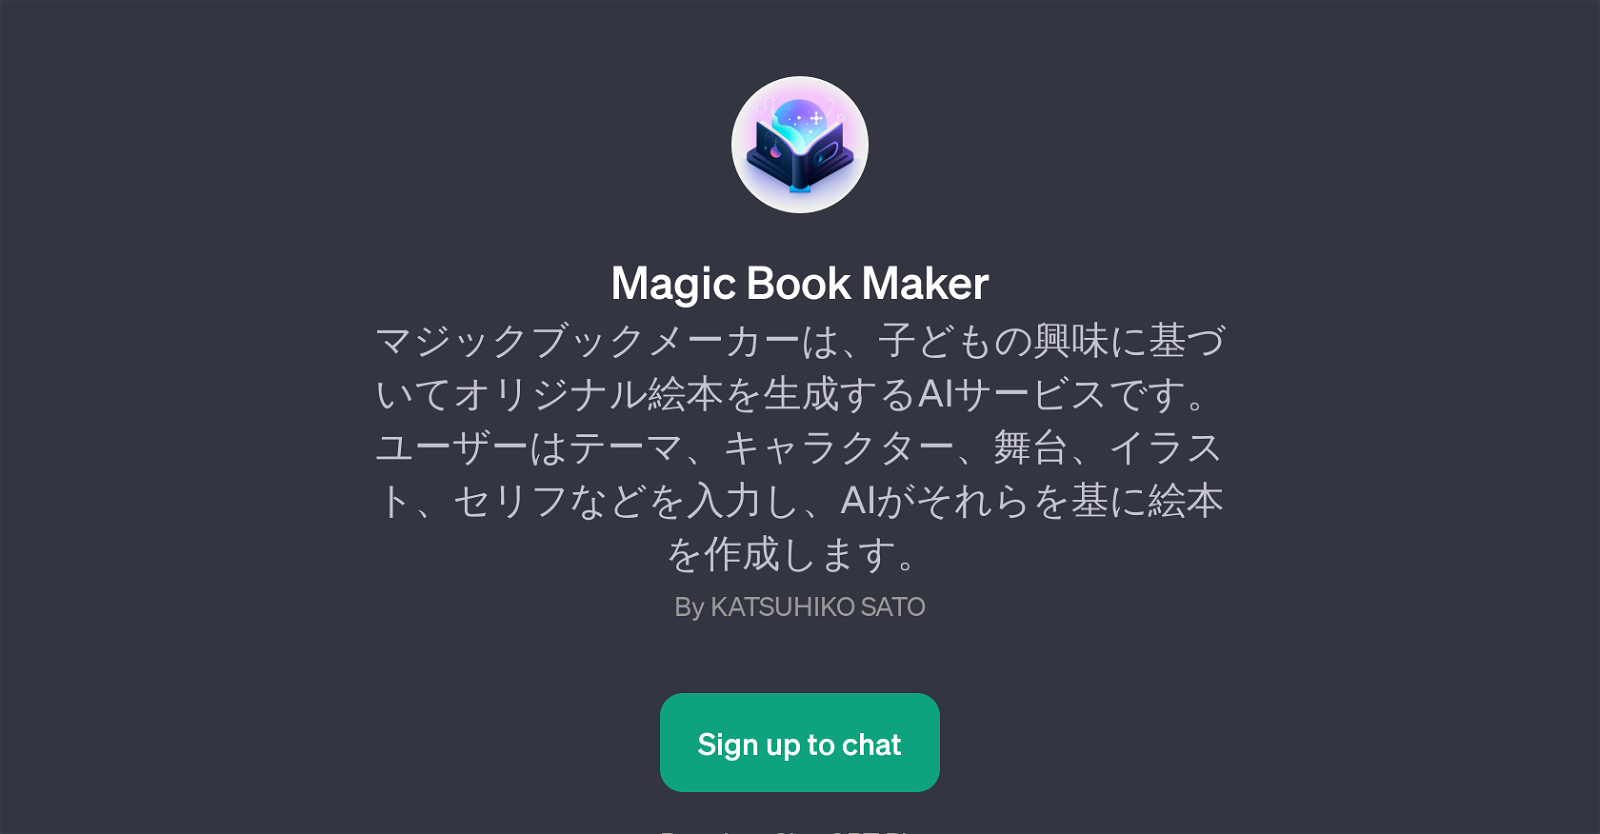 Magic Book Maker website